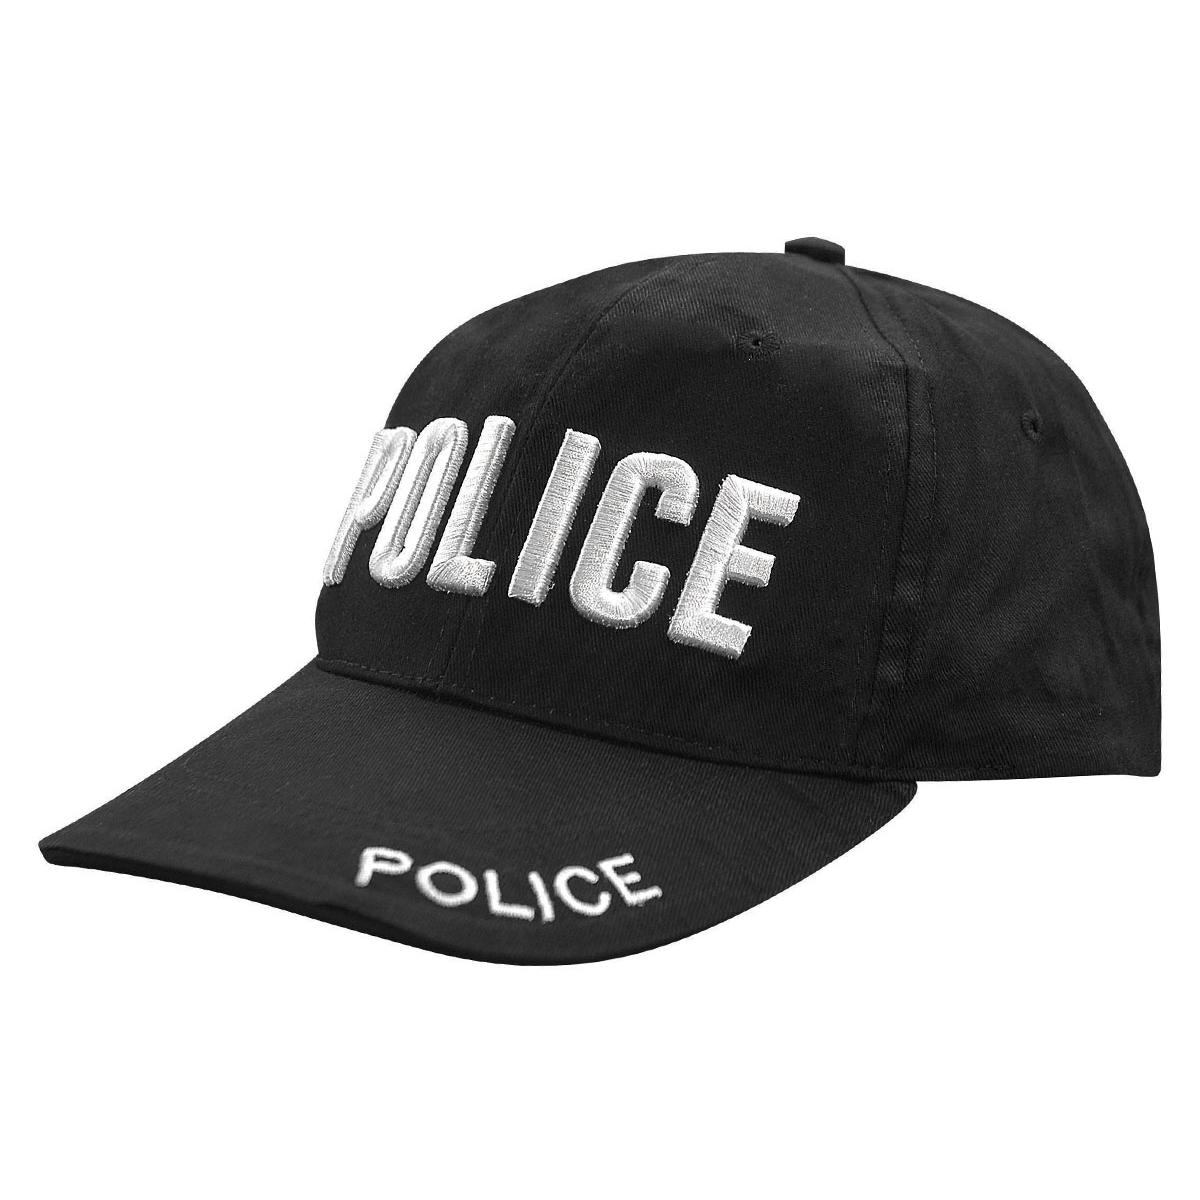 Police Cap 3D Stick